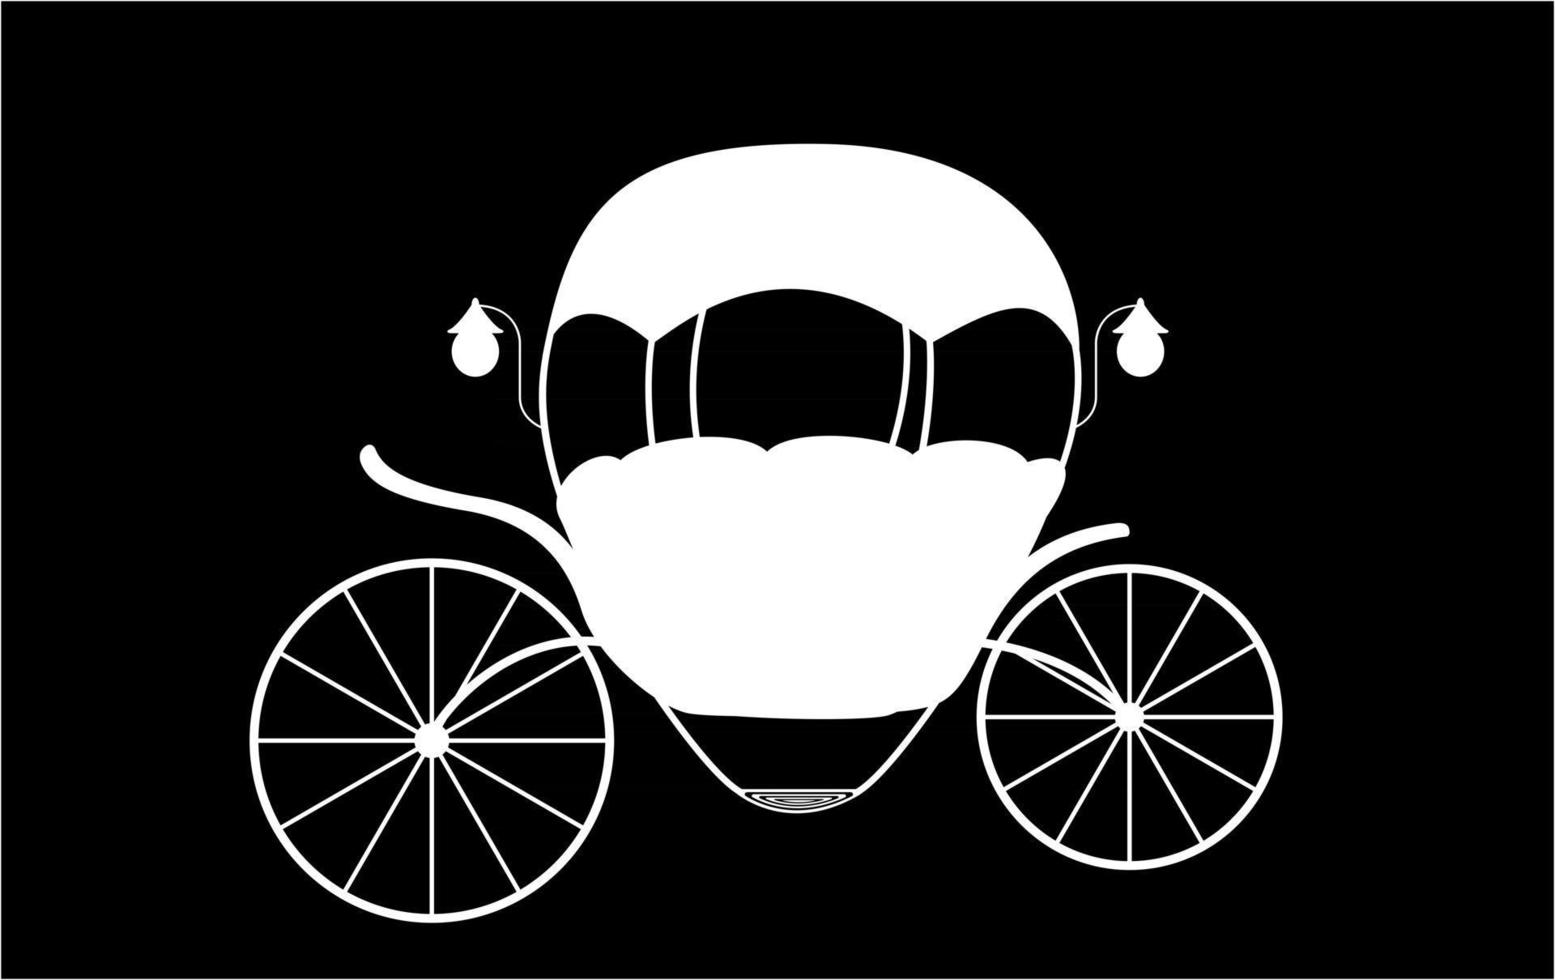 Black and White Cinderella Fairytale carriage. Vector Illustrati